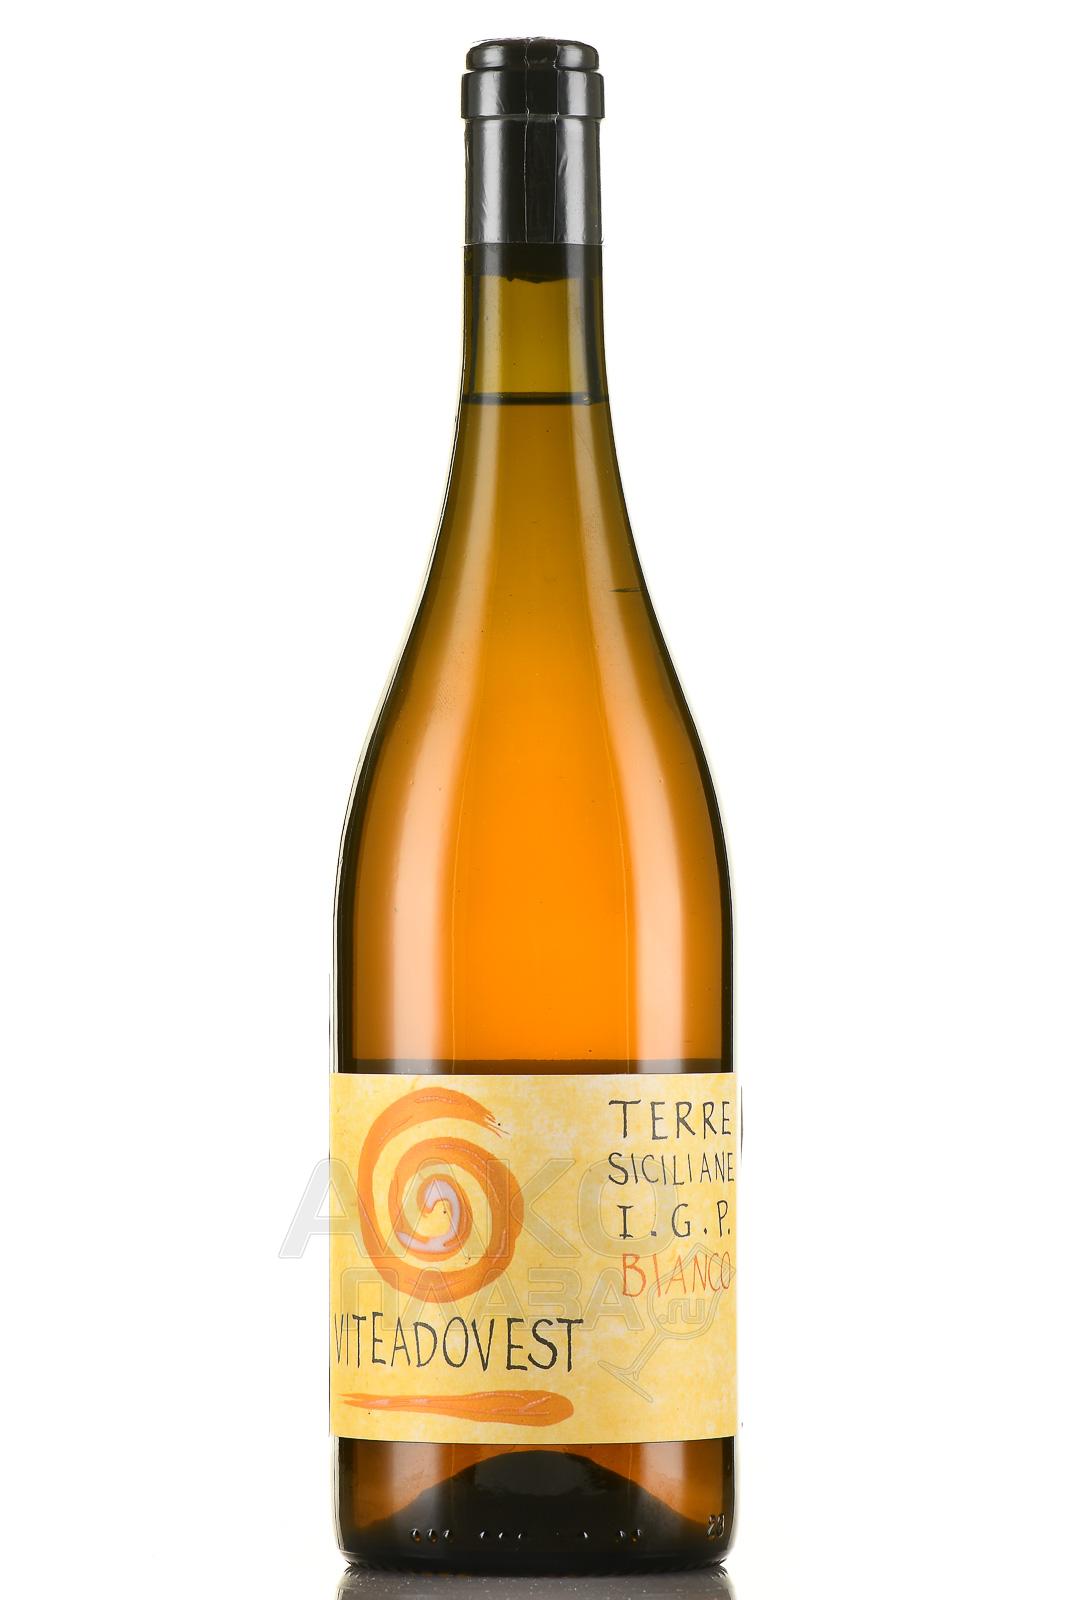 Viteadovest Terre Siciliane Bianco - вино Витедовест Терре Сичилиане Бьянко 0.75 л белое сухое